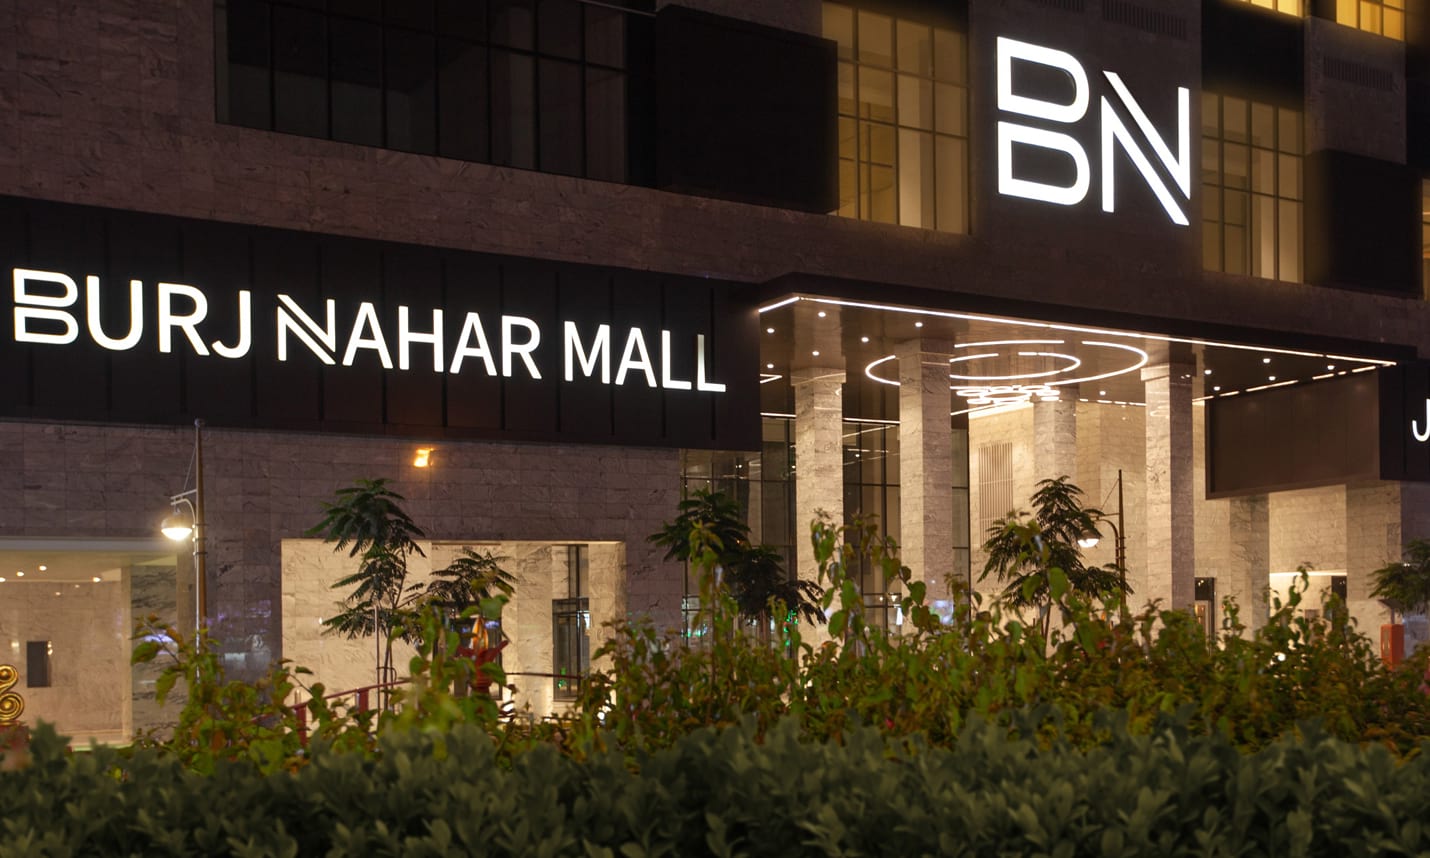 Burjnahar Mall